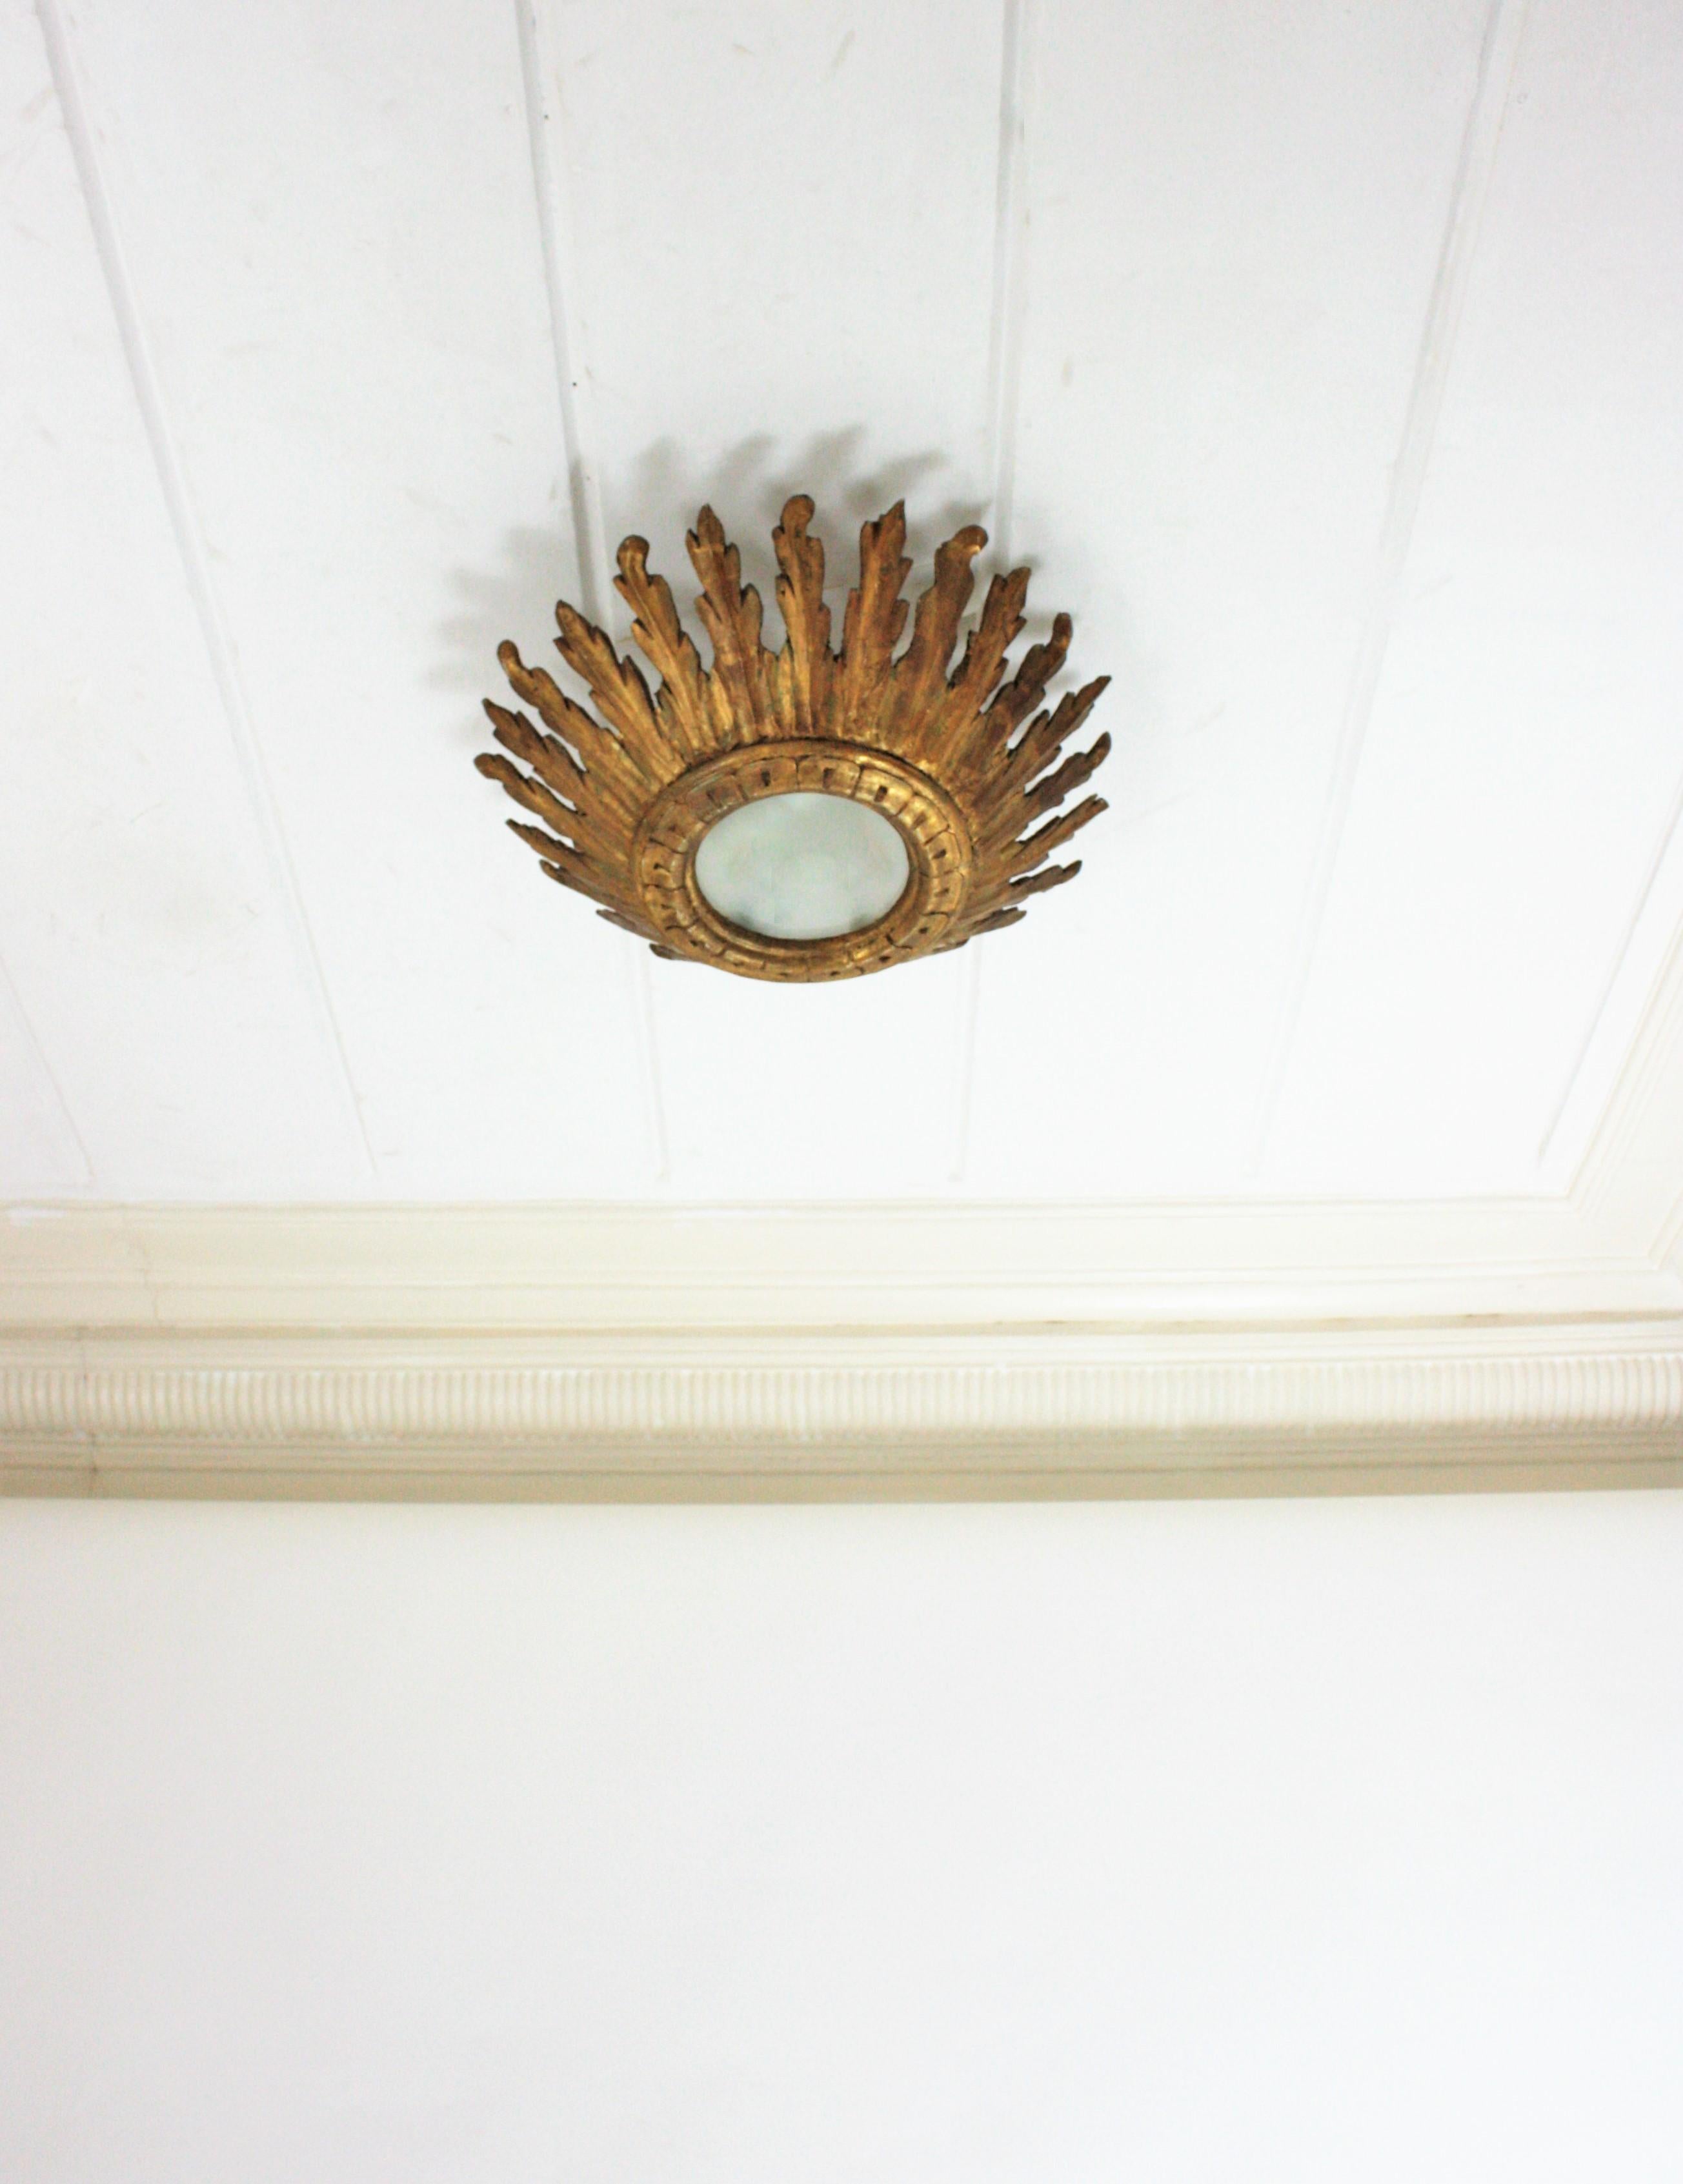 Sunburst Crown Ceiling Flush Mount Light Fixture in Giltwood, Spanish Baroque For Sale 11